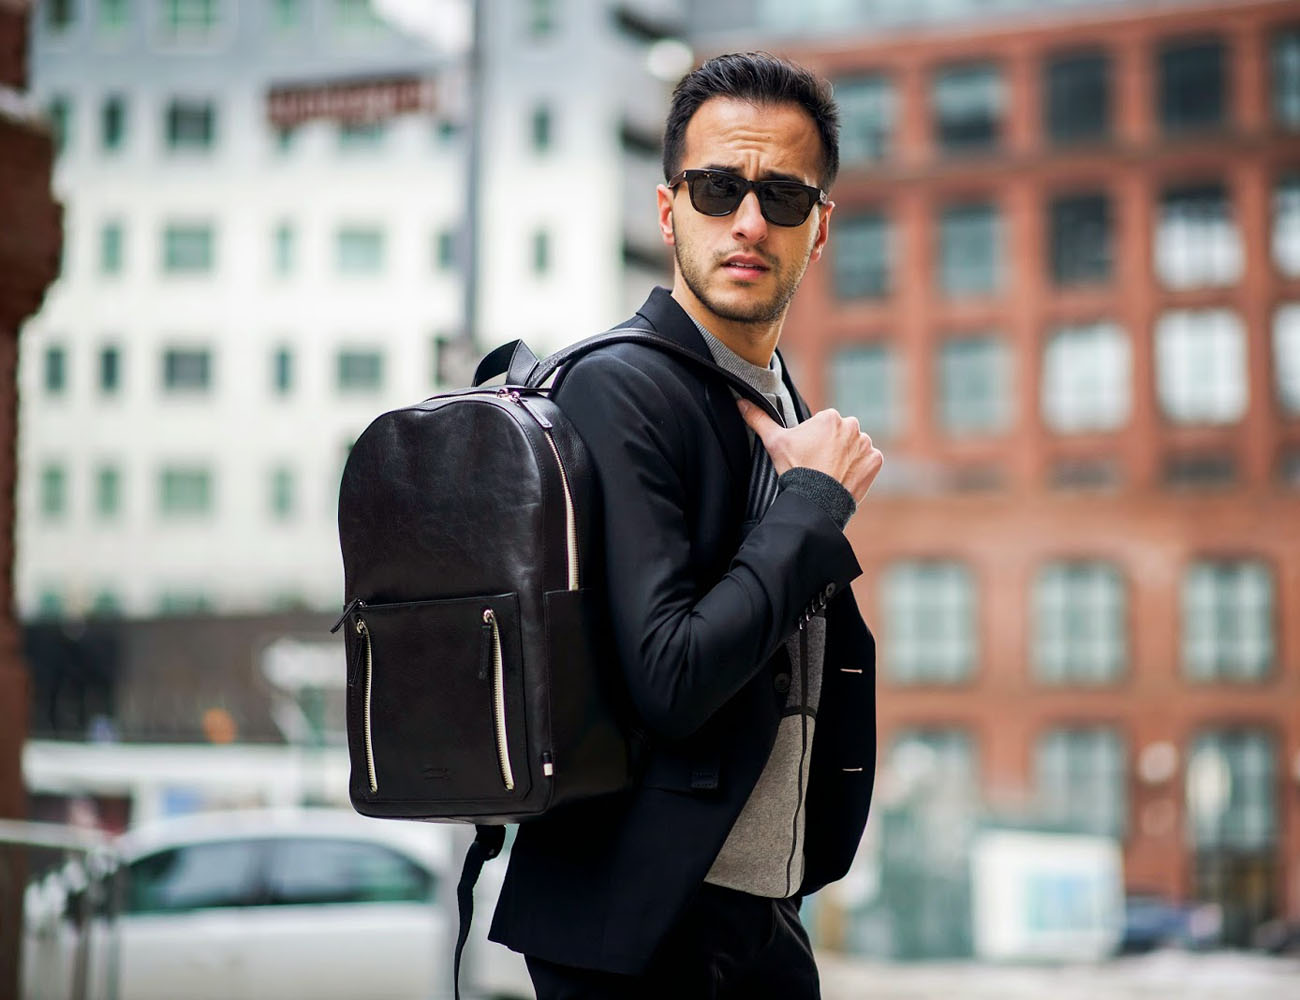 Bondi Leather Backpack by Ben Minkoff